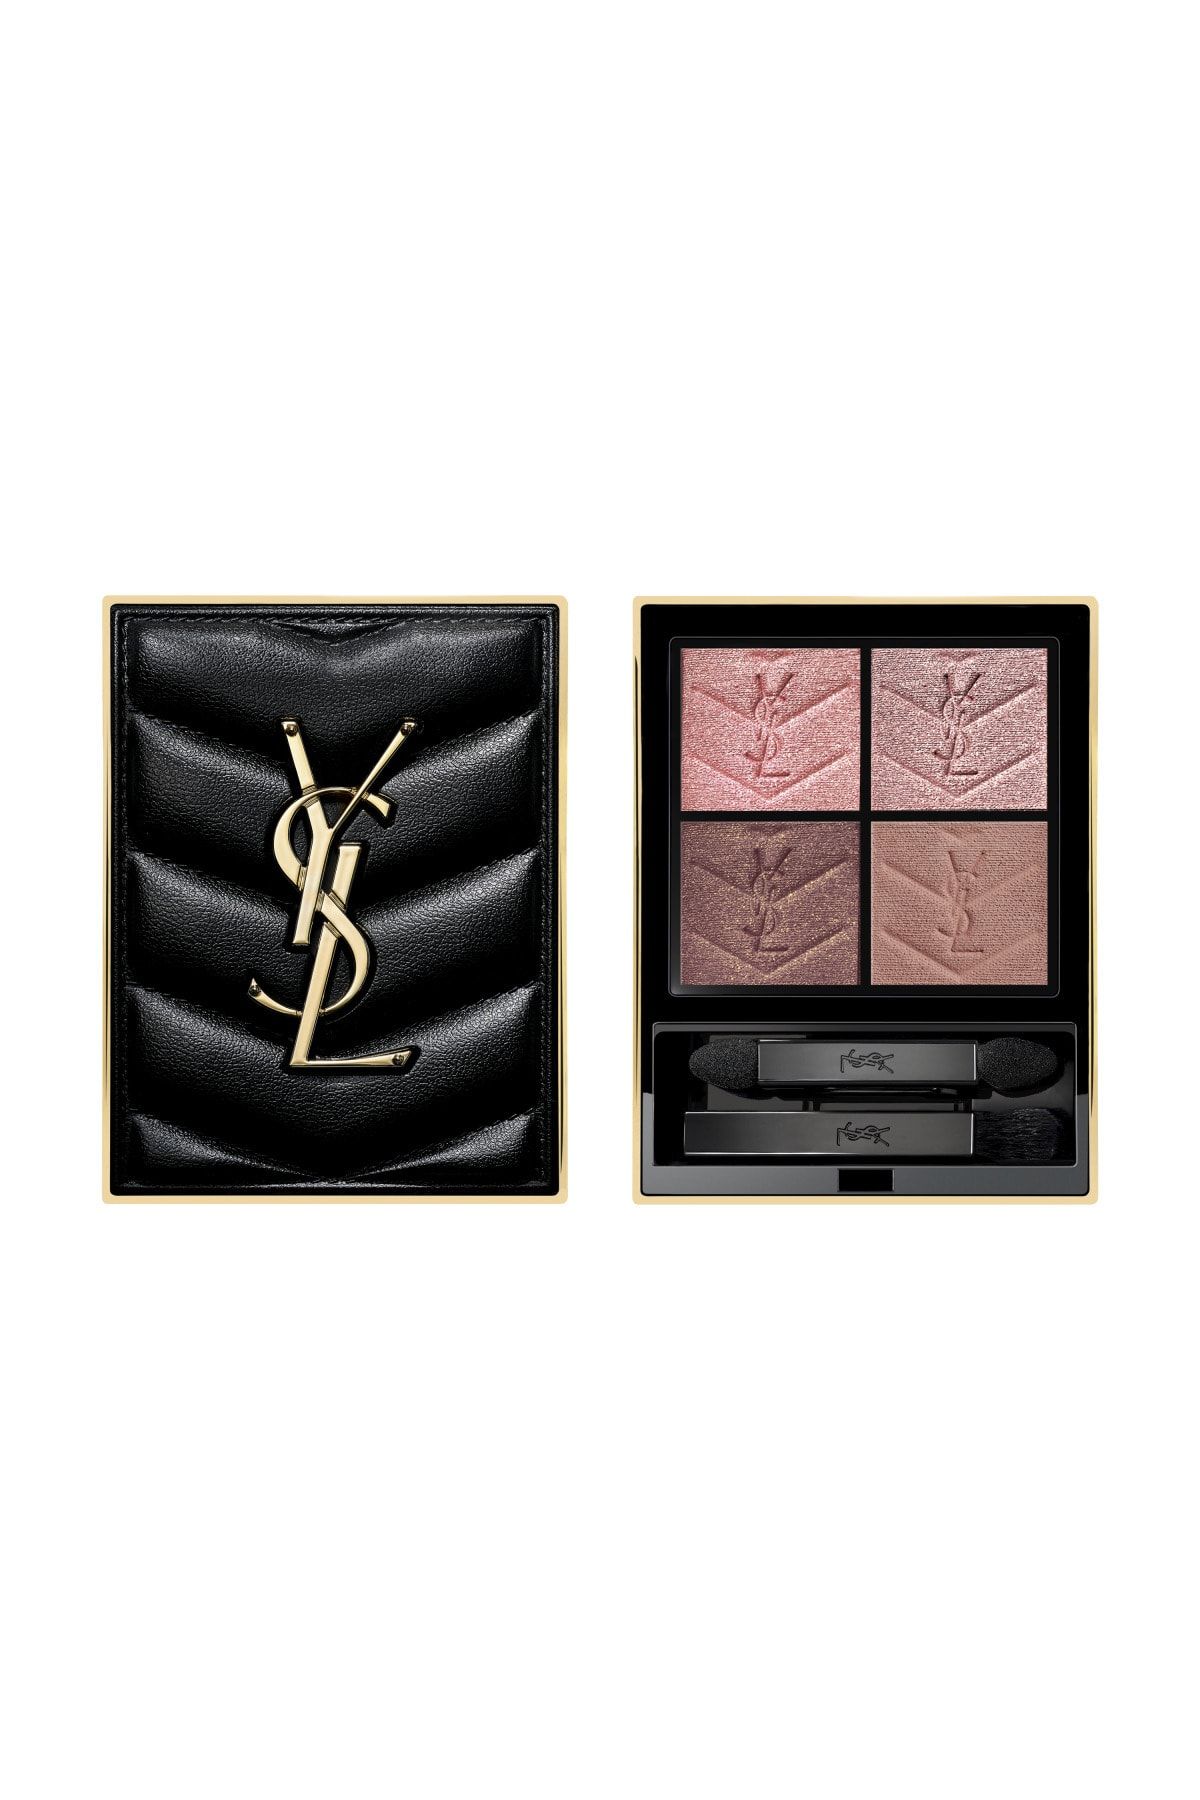 Yves Saint Laurent Couture Mini Clutch Far 400 - Babylone Roses 3614273921718